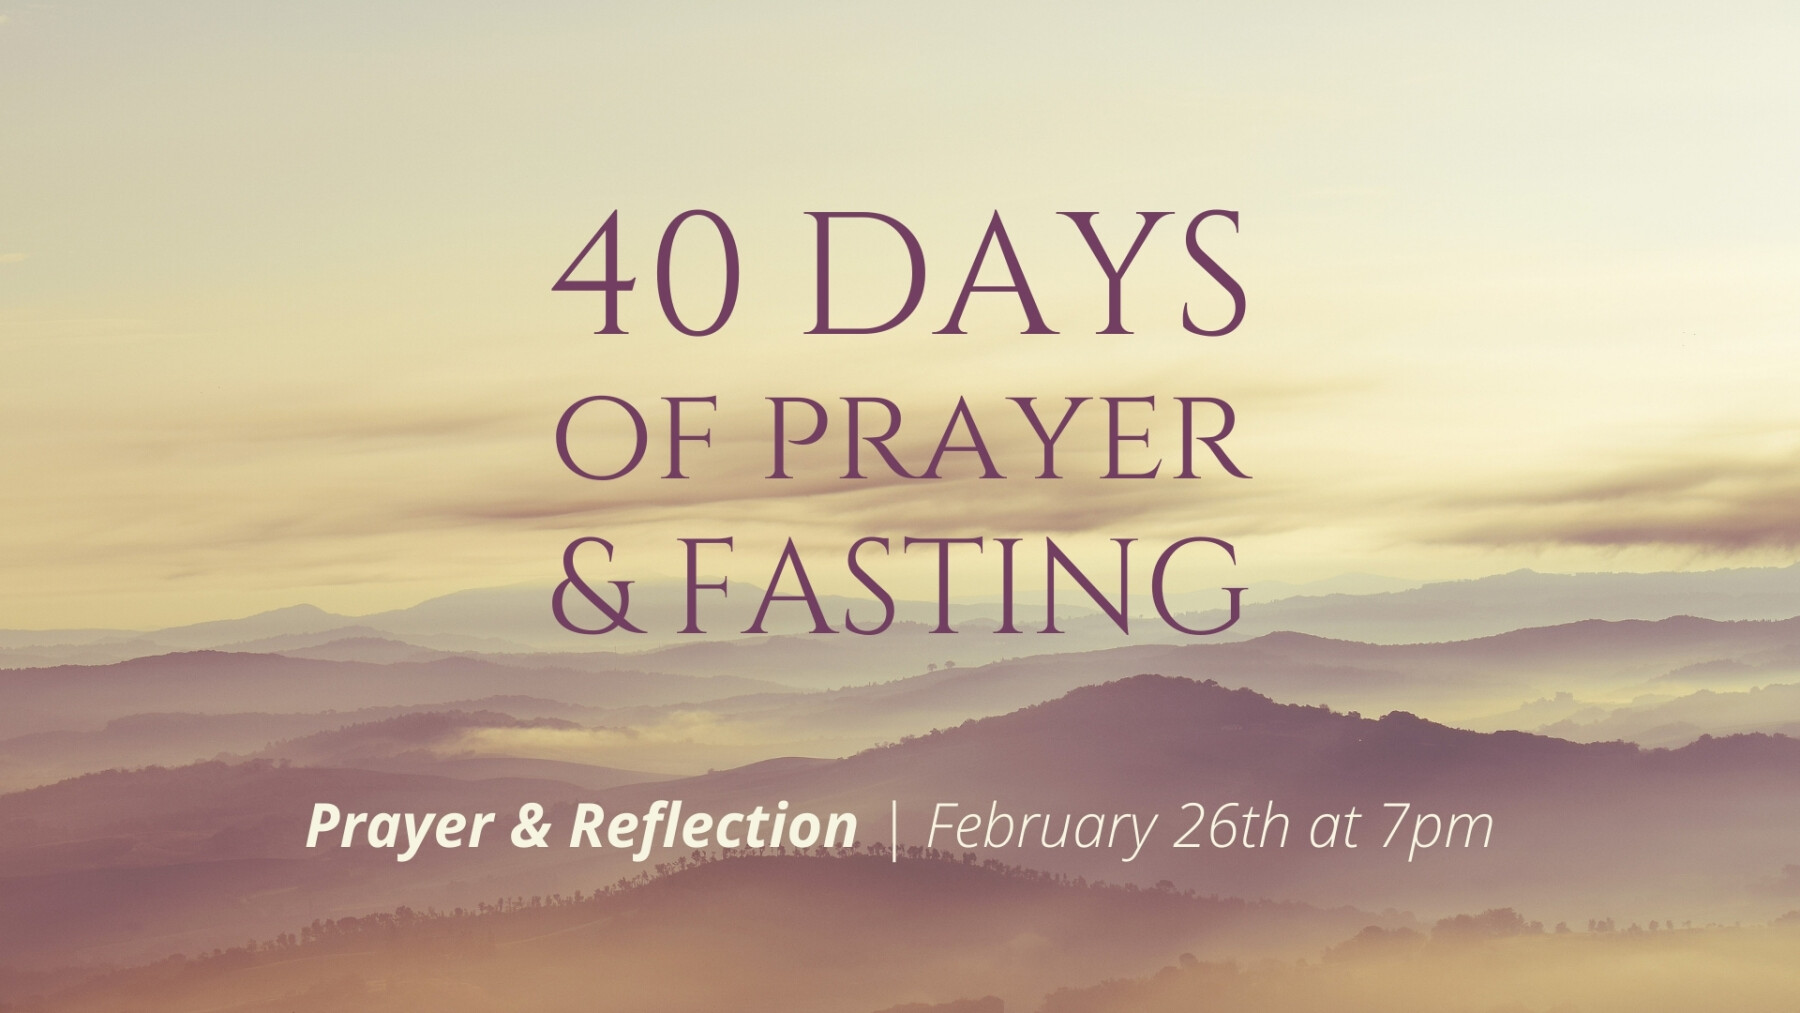 Prayer and Reflection at 7pm